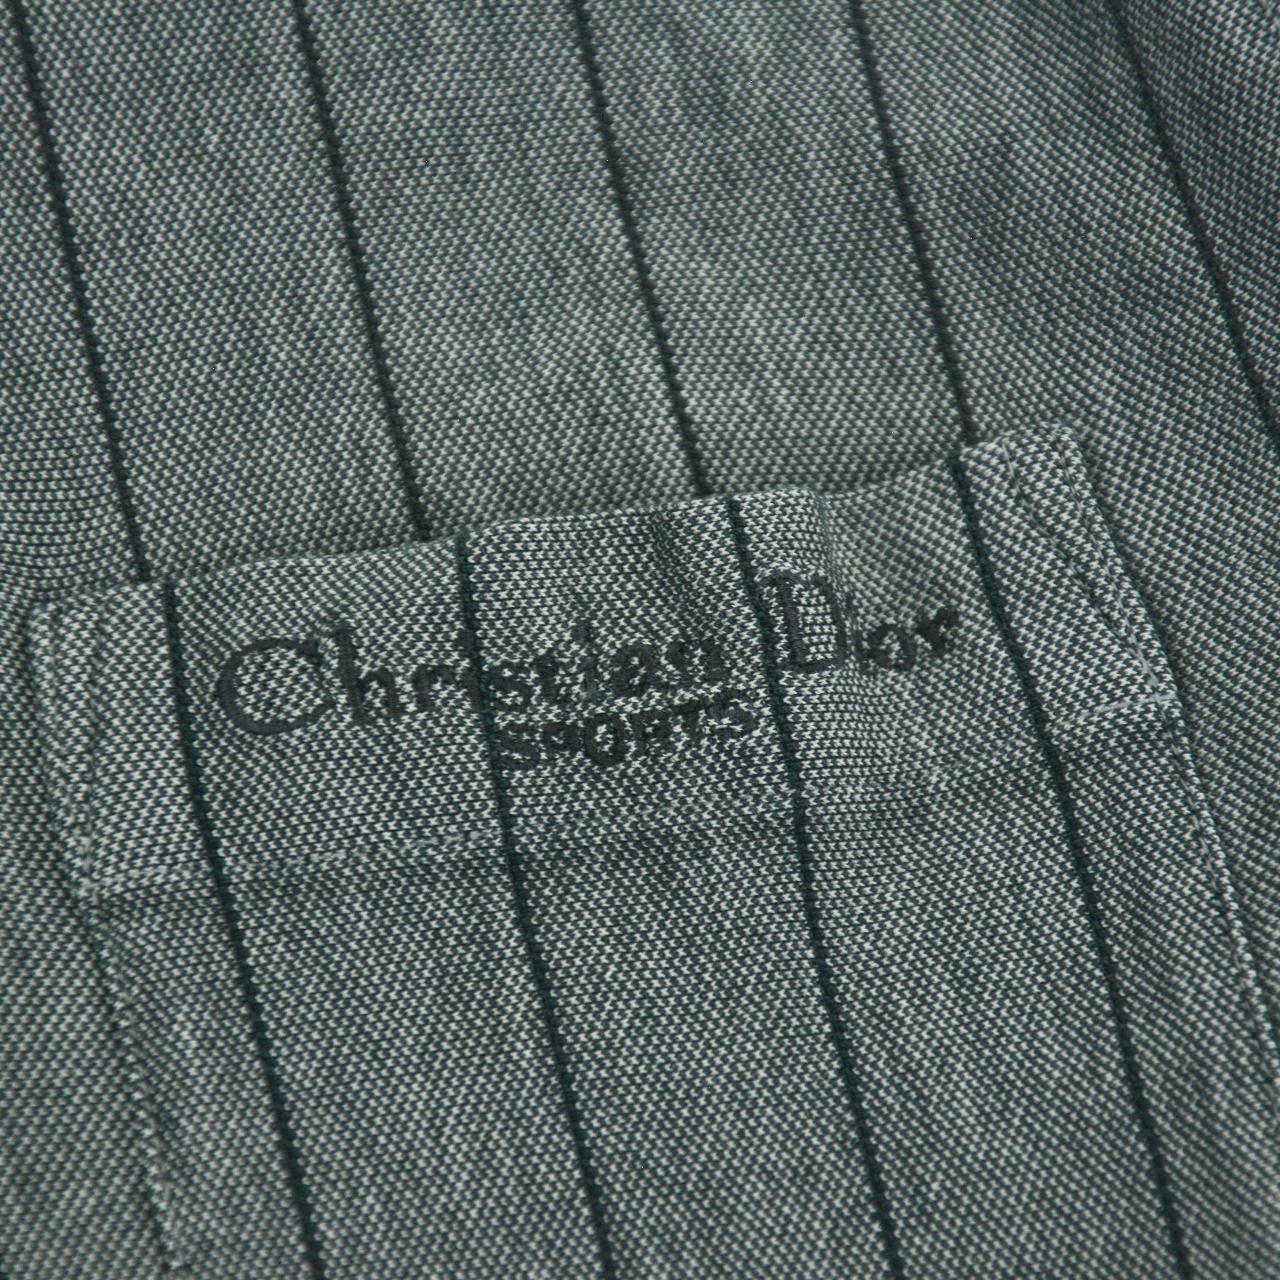 Vintage Christian Dior Sports Long Sleeve Polo Shirt Size S